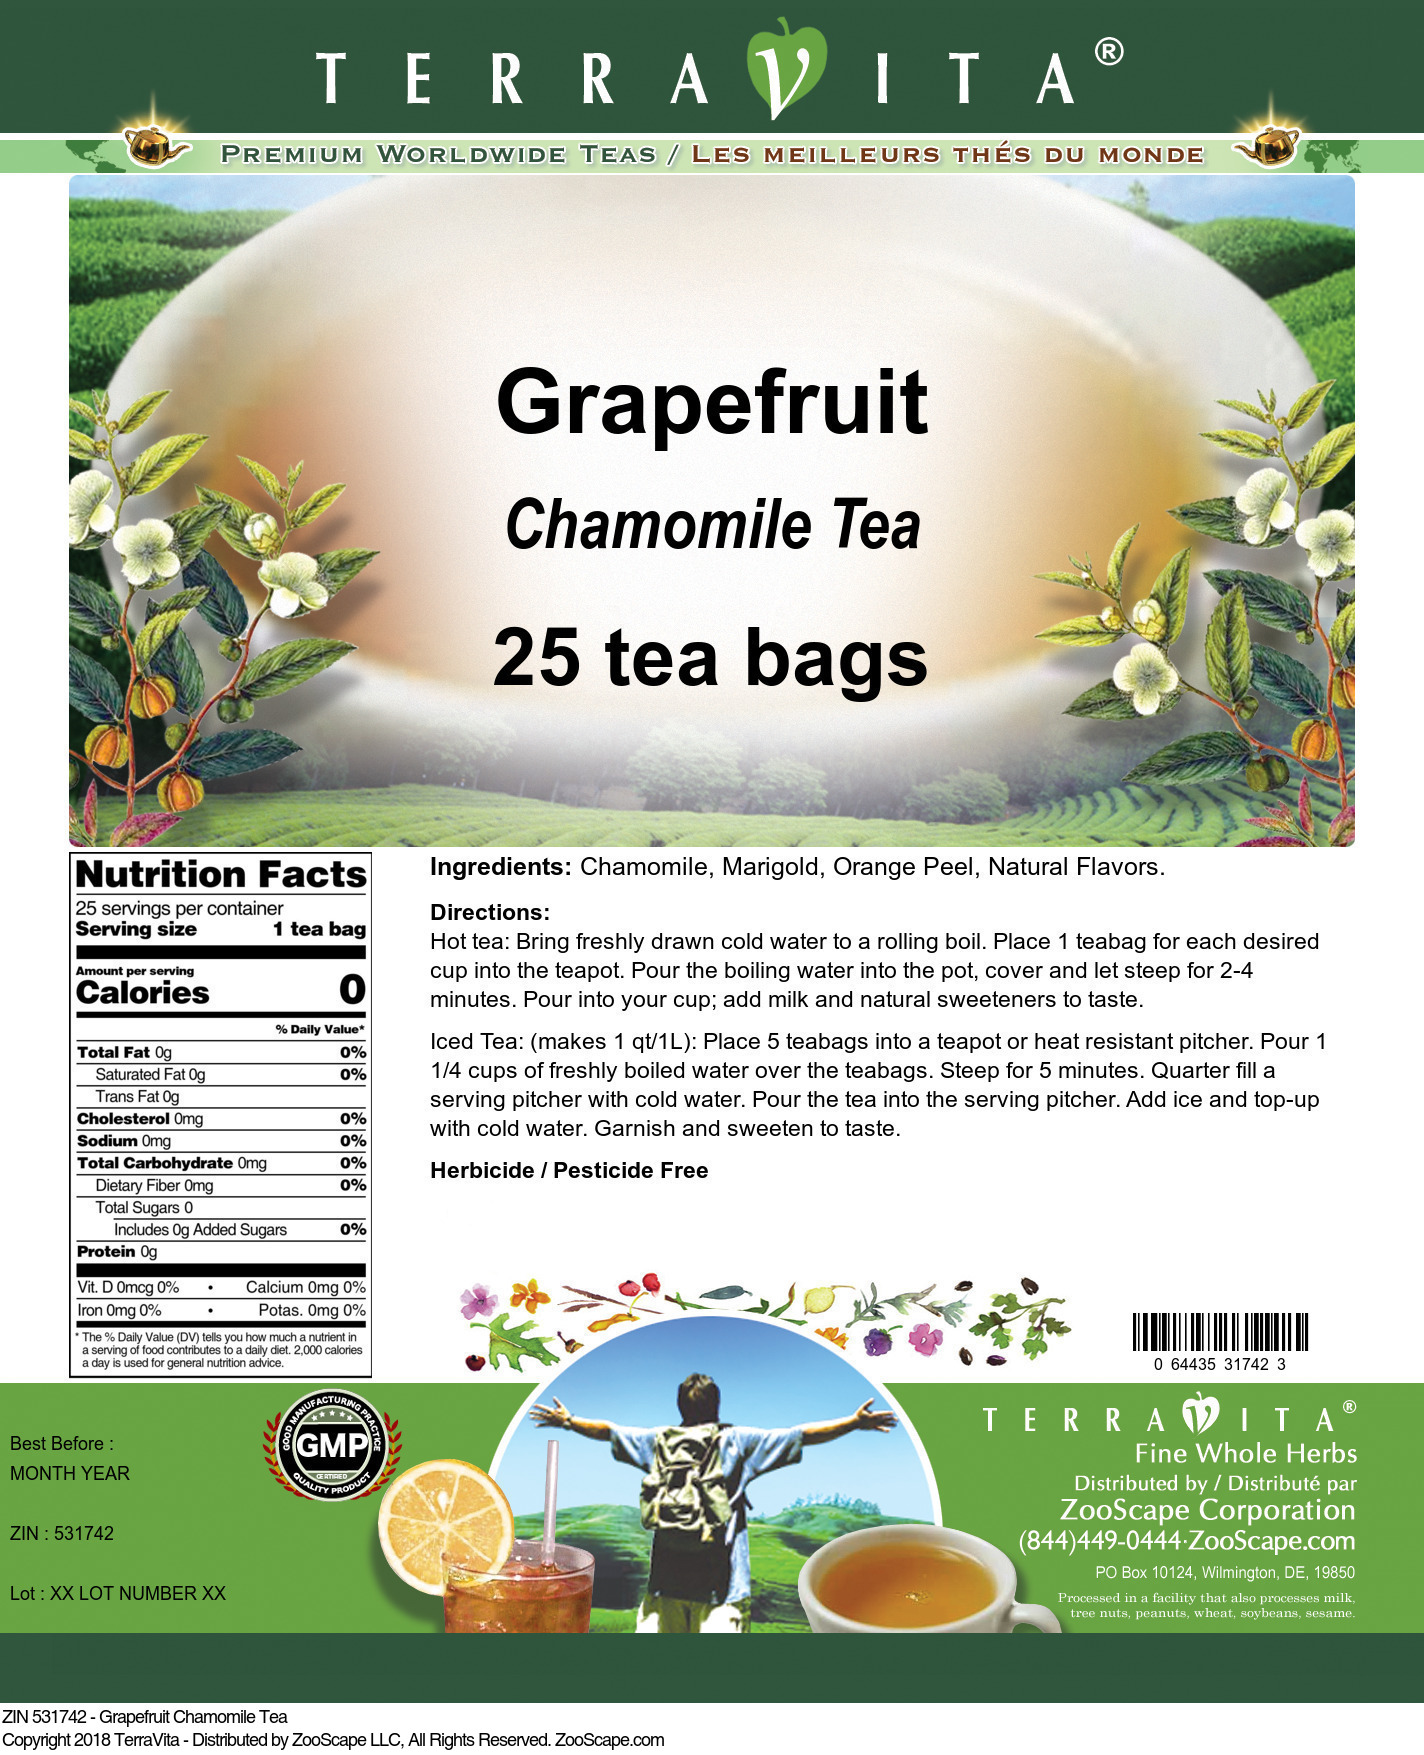 Grapefruit Chamomile Tea - Label